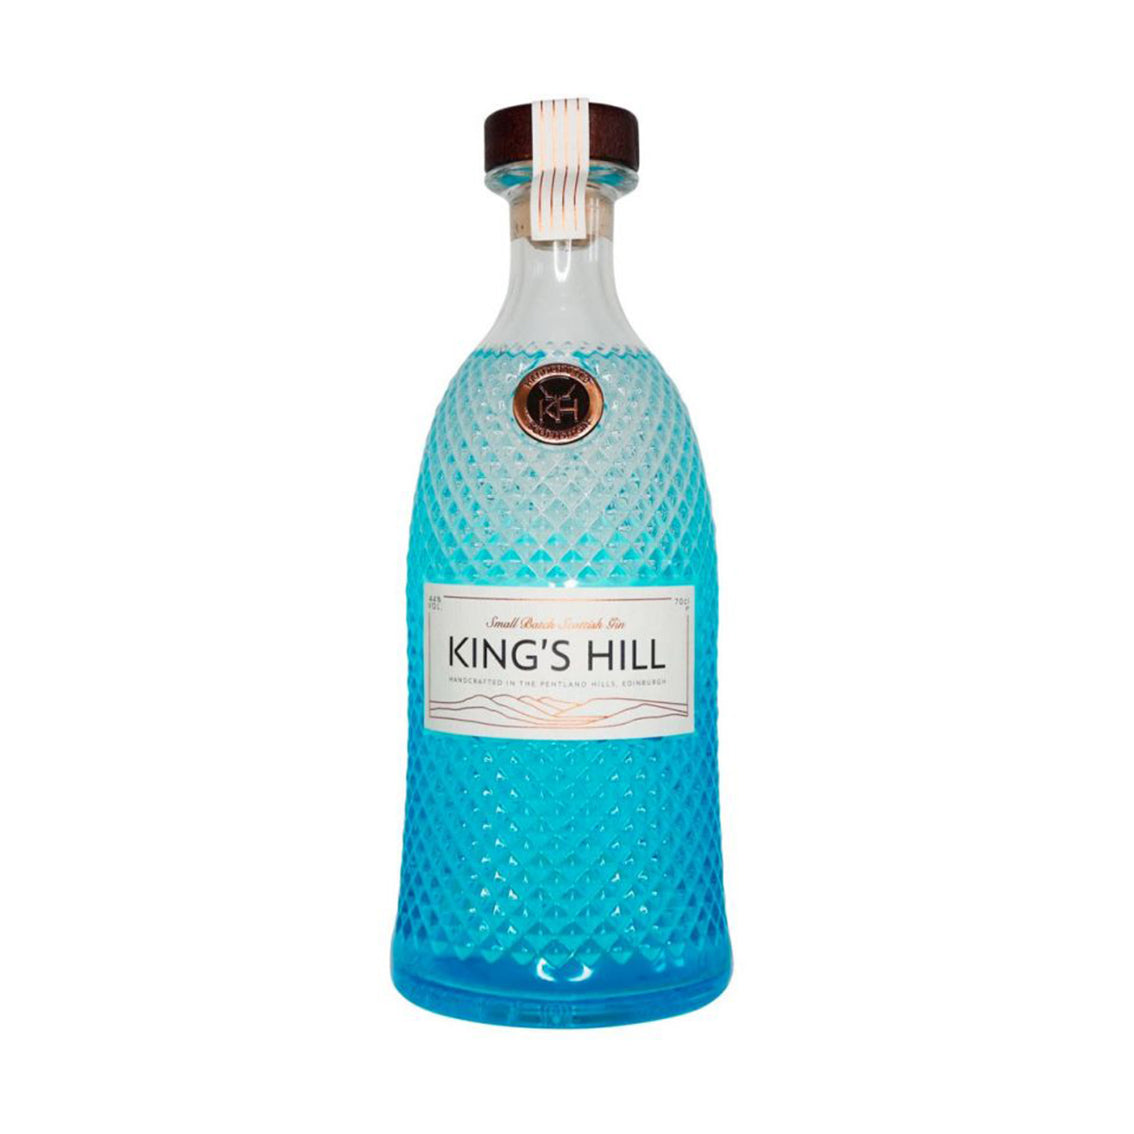 Kings Hill Scottish Gin